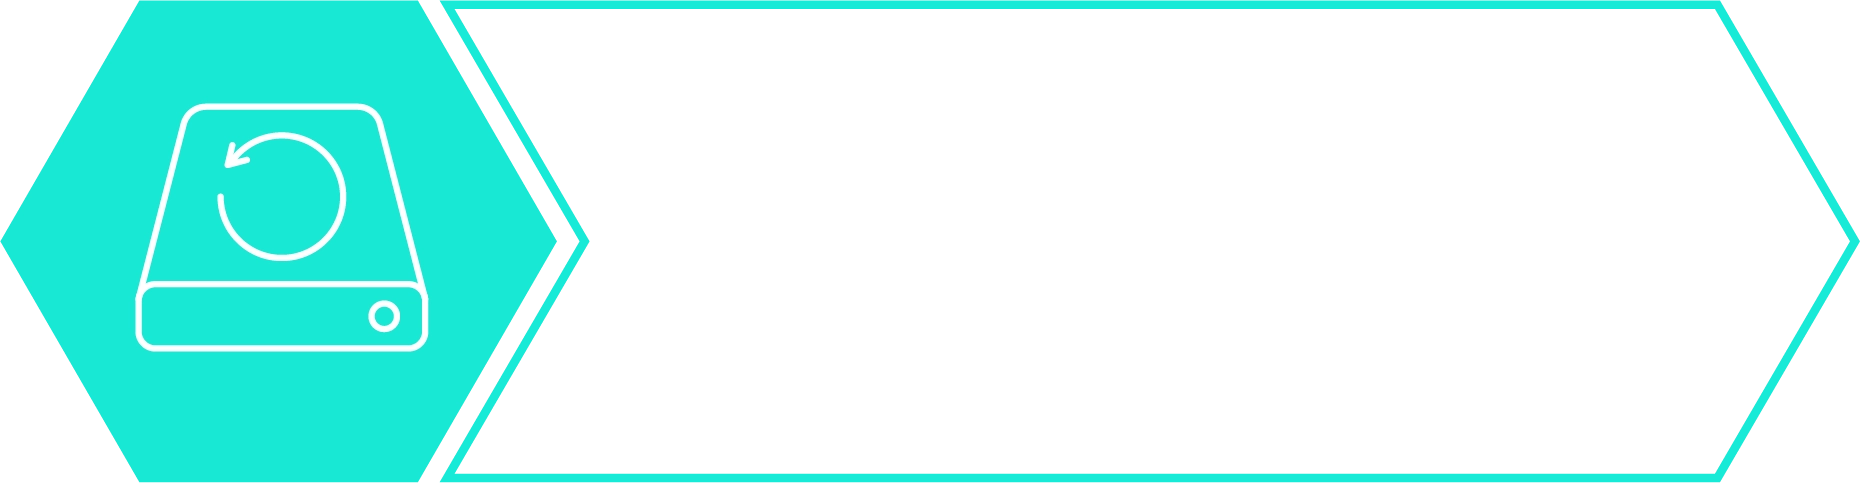 Managed Services - Managed Backup